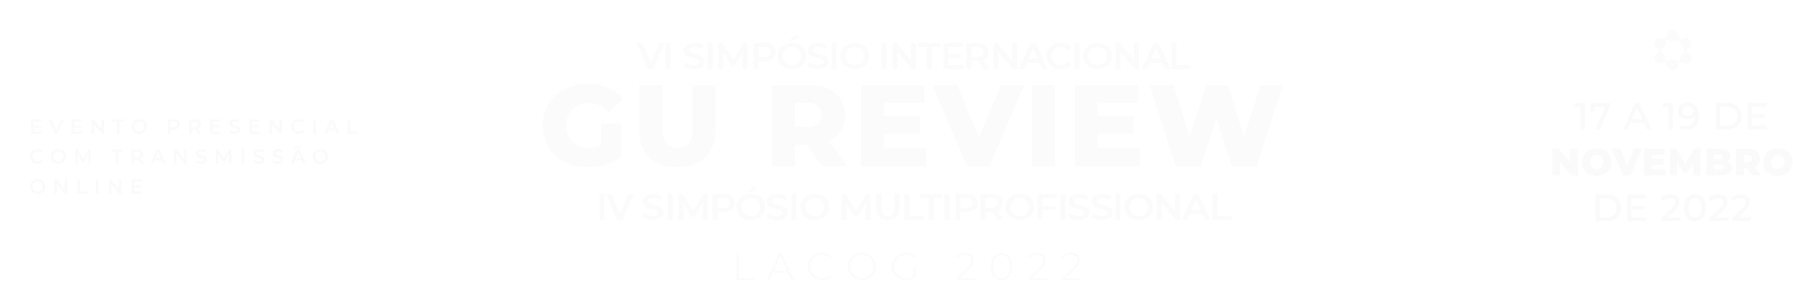 VI SIMPÓSIO INTERNACIONAL GU-REVIEW 2022